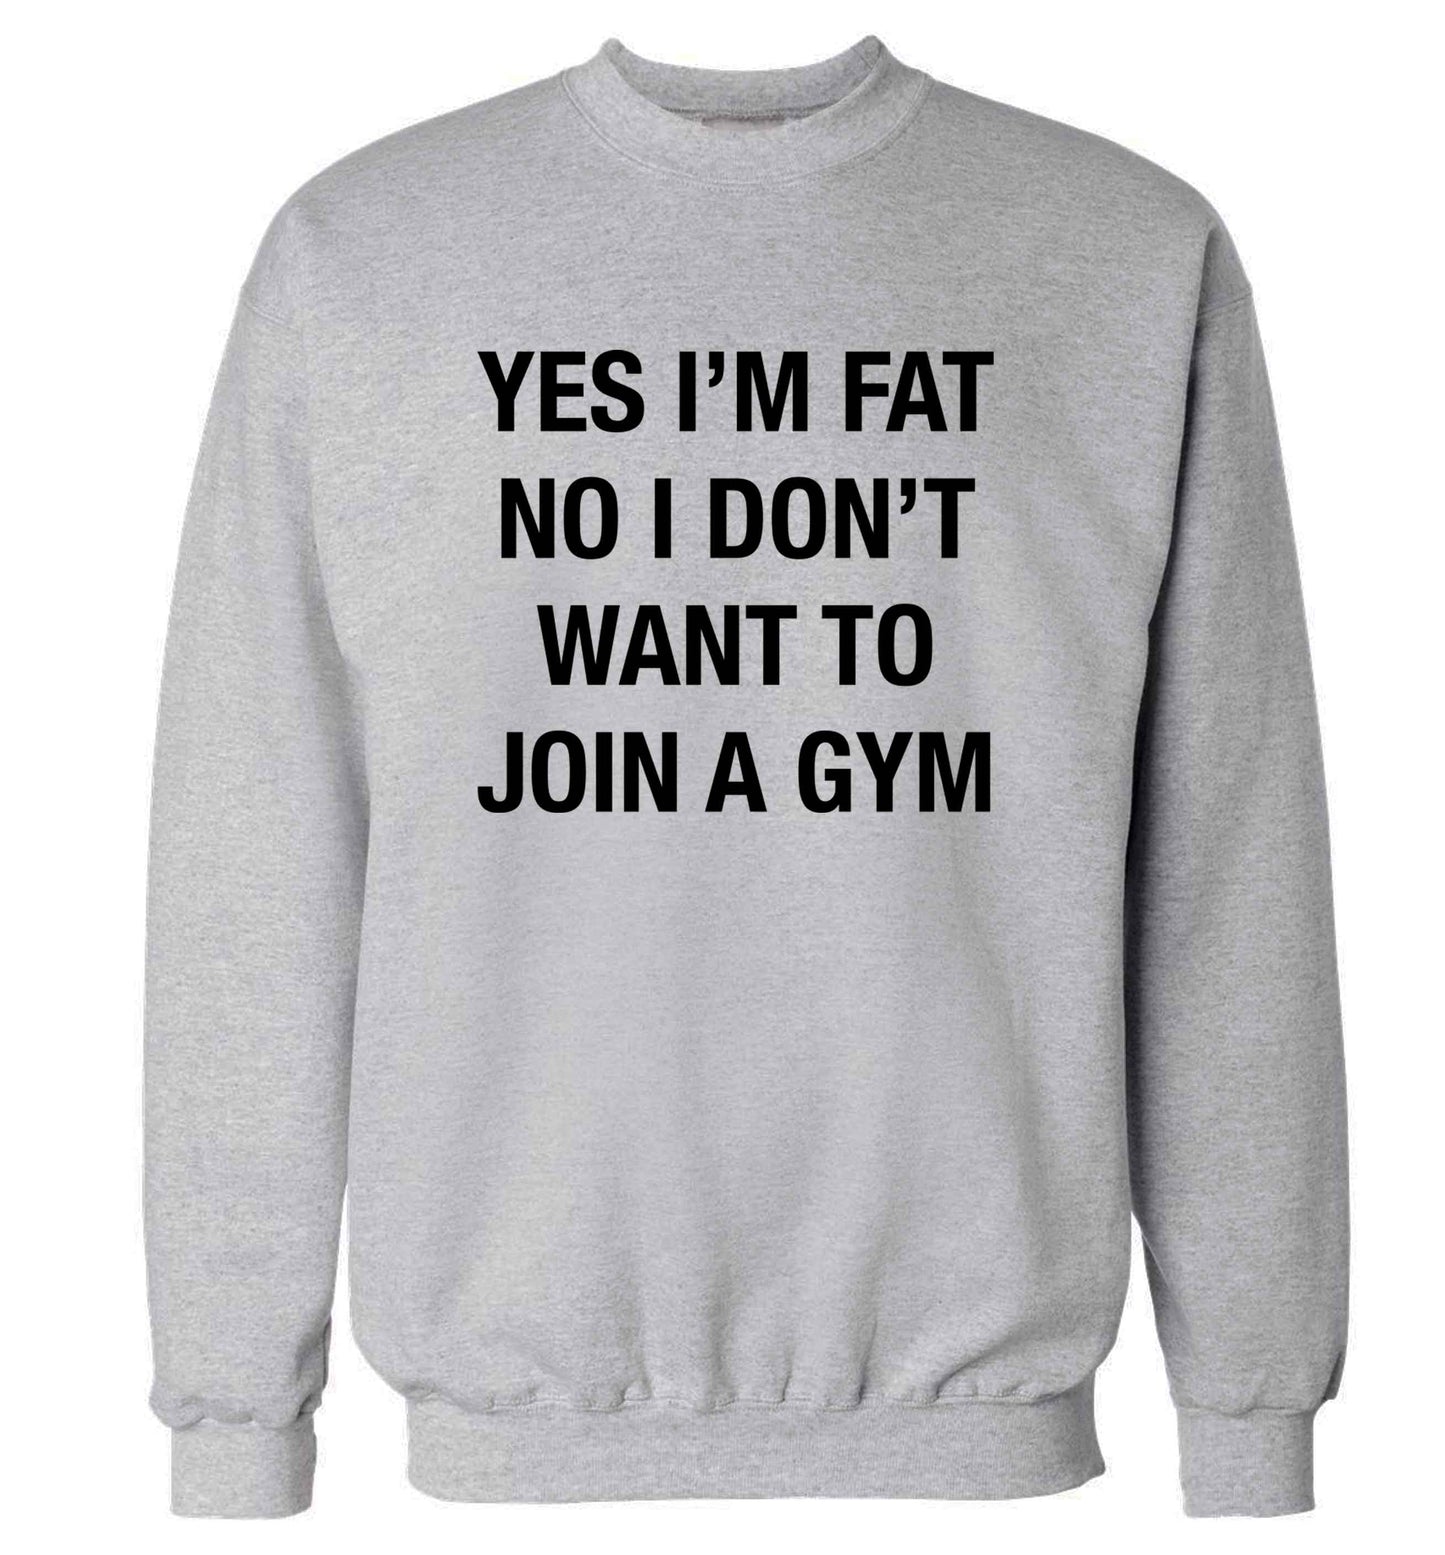 Yes I'm fat, no I don't want to go to the gym adult's unisex grey sweater 2XL